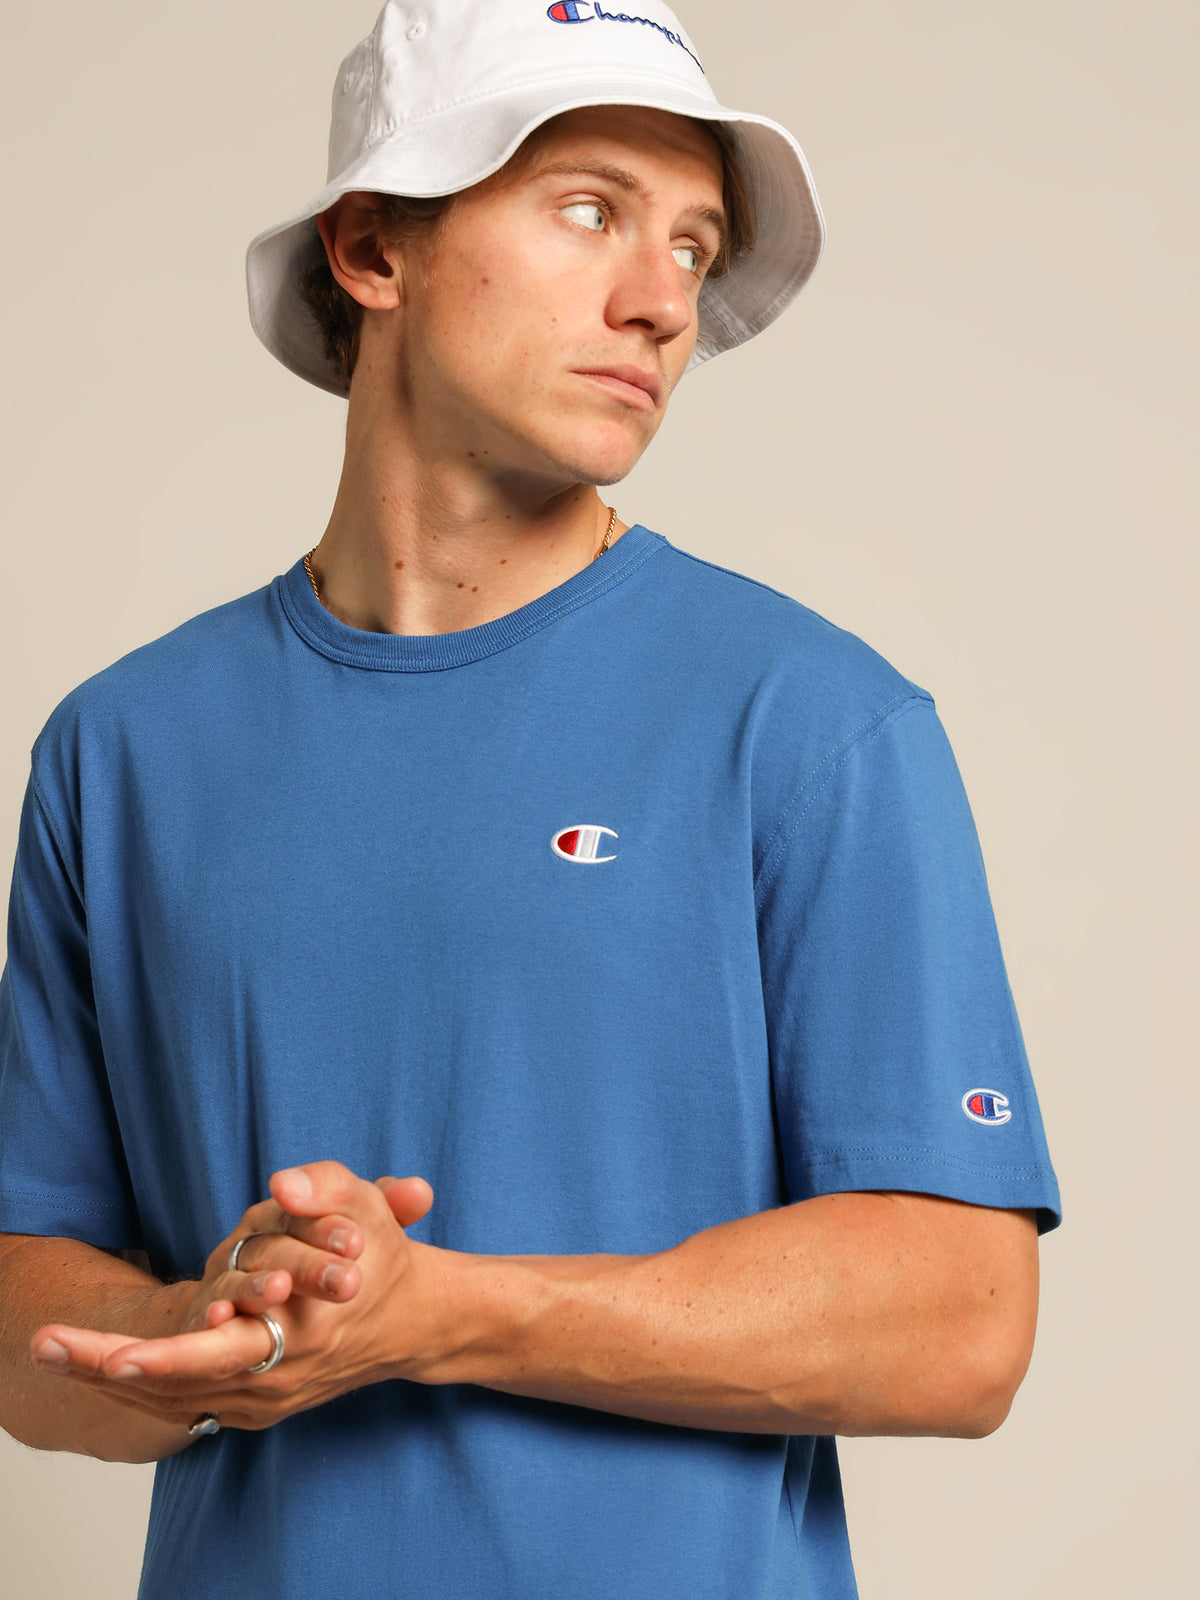 Re:bound Lightweight T-Shirt in Living In Blue